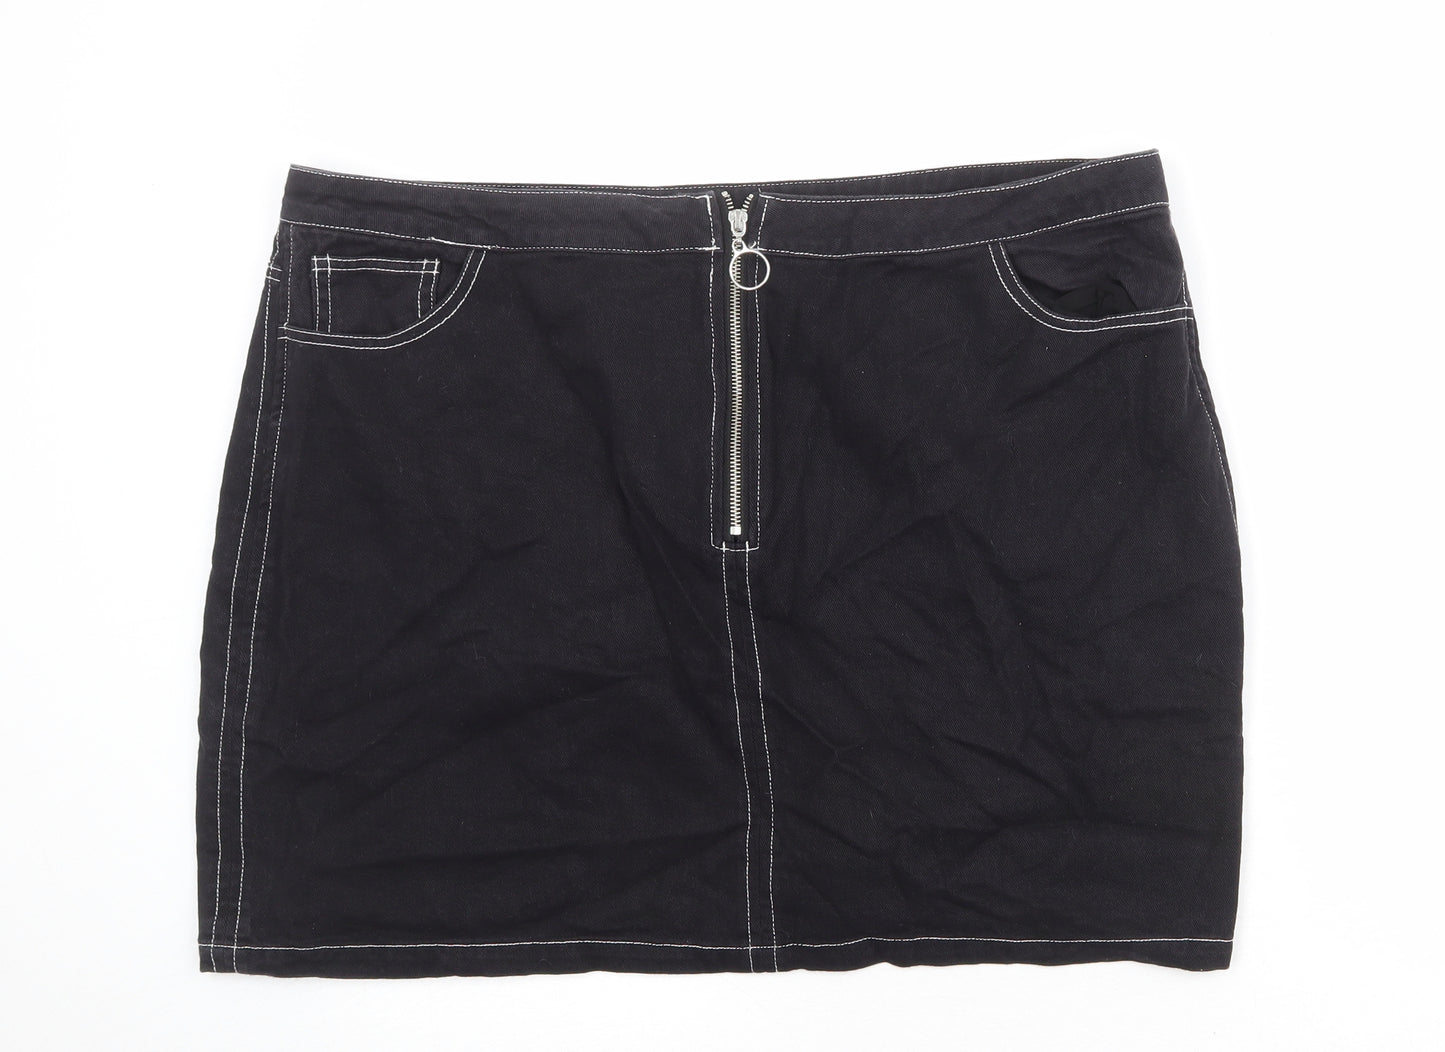 FOREVER 21 Womens Black Cotton A-Line Skirt Size 3XL Zip